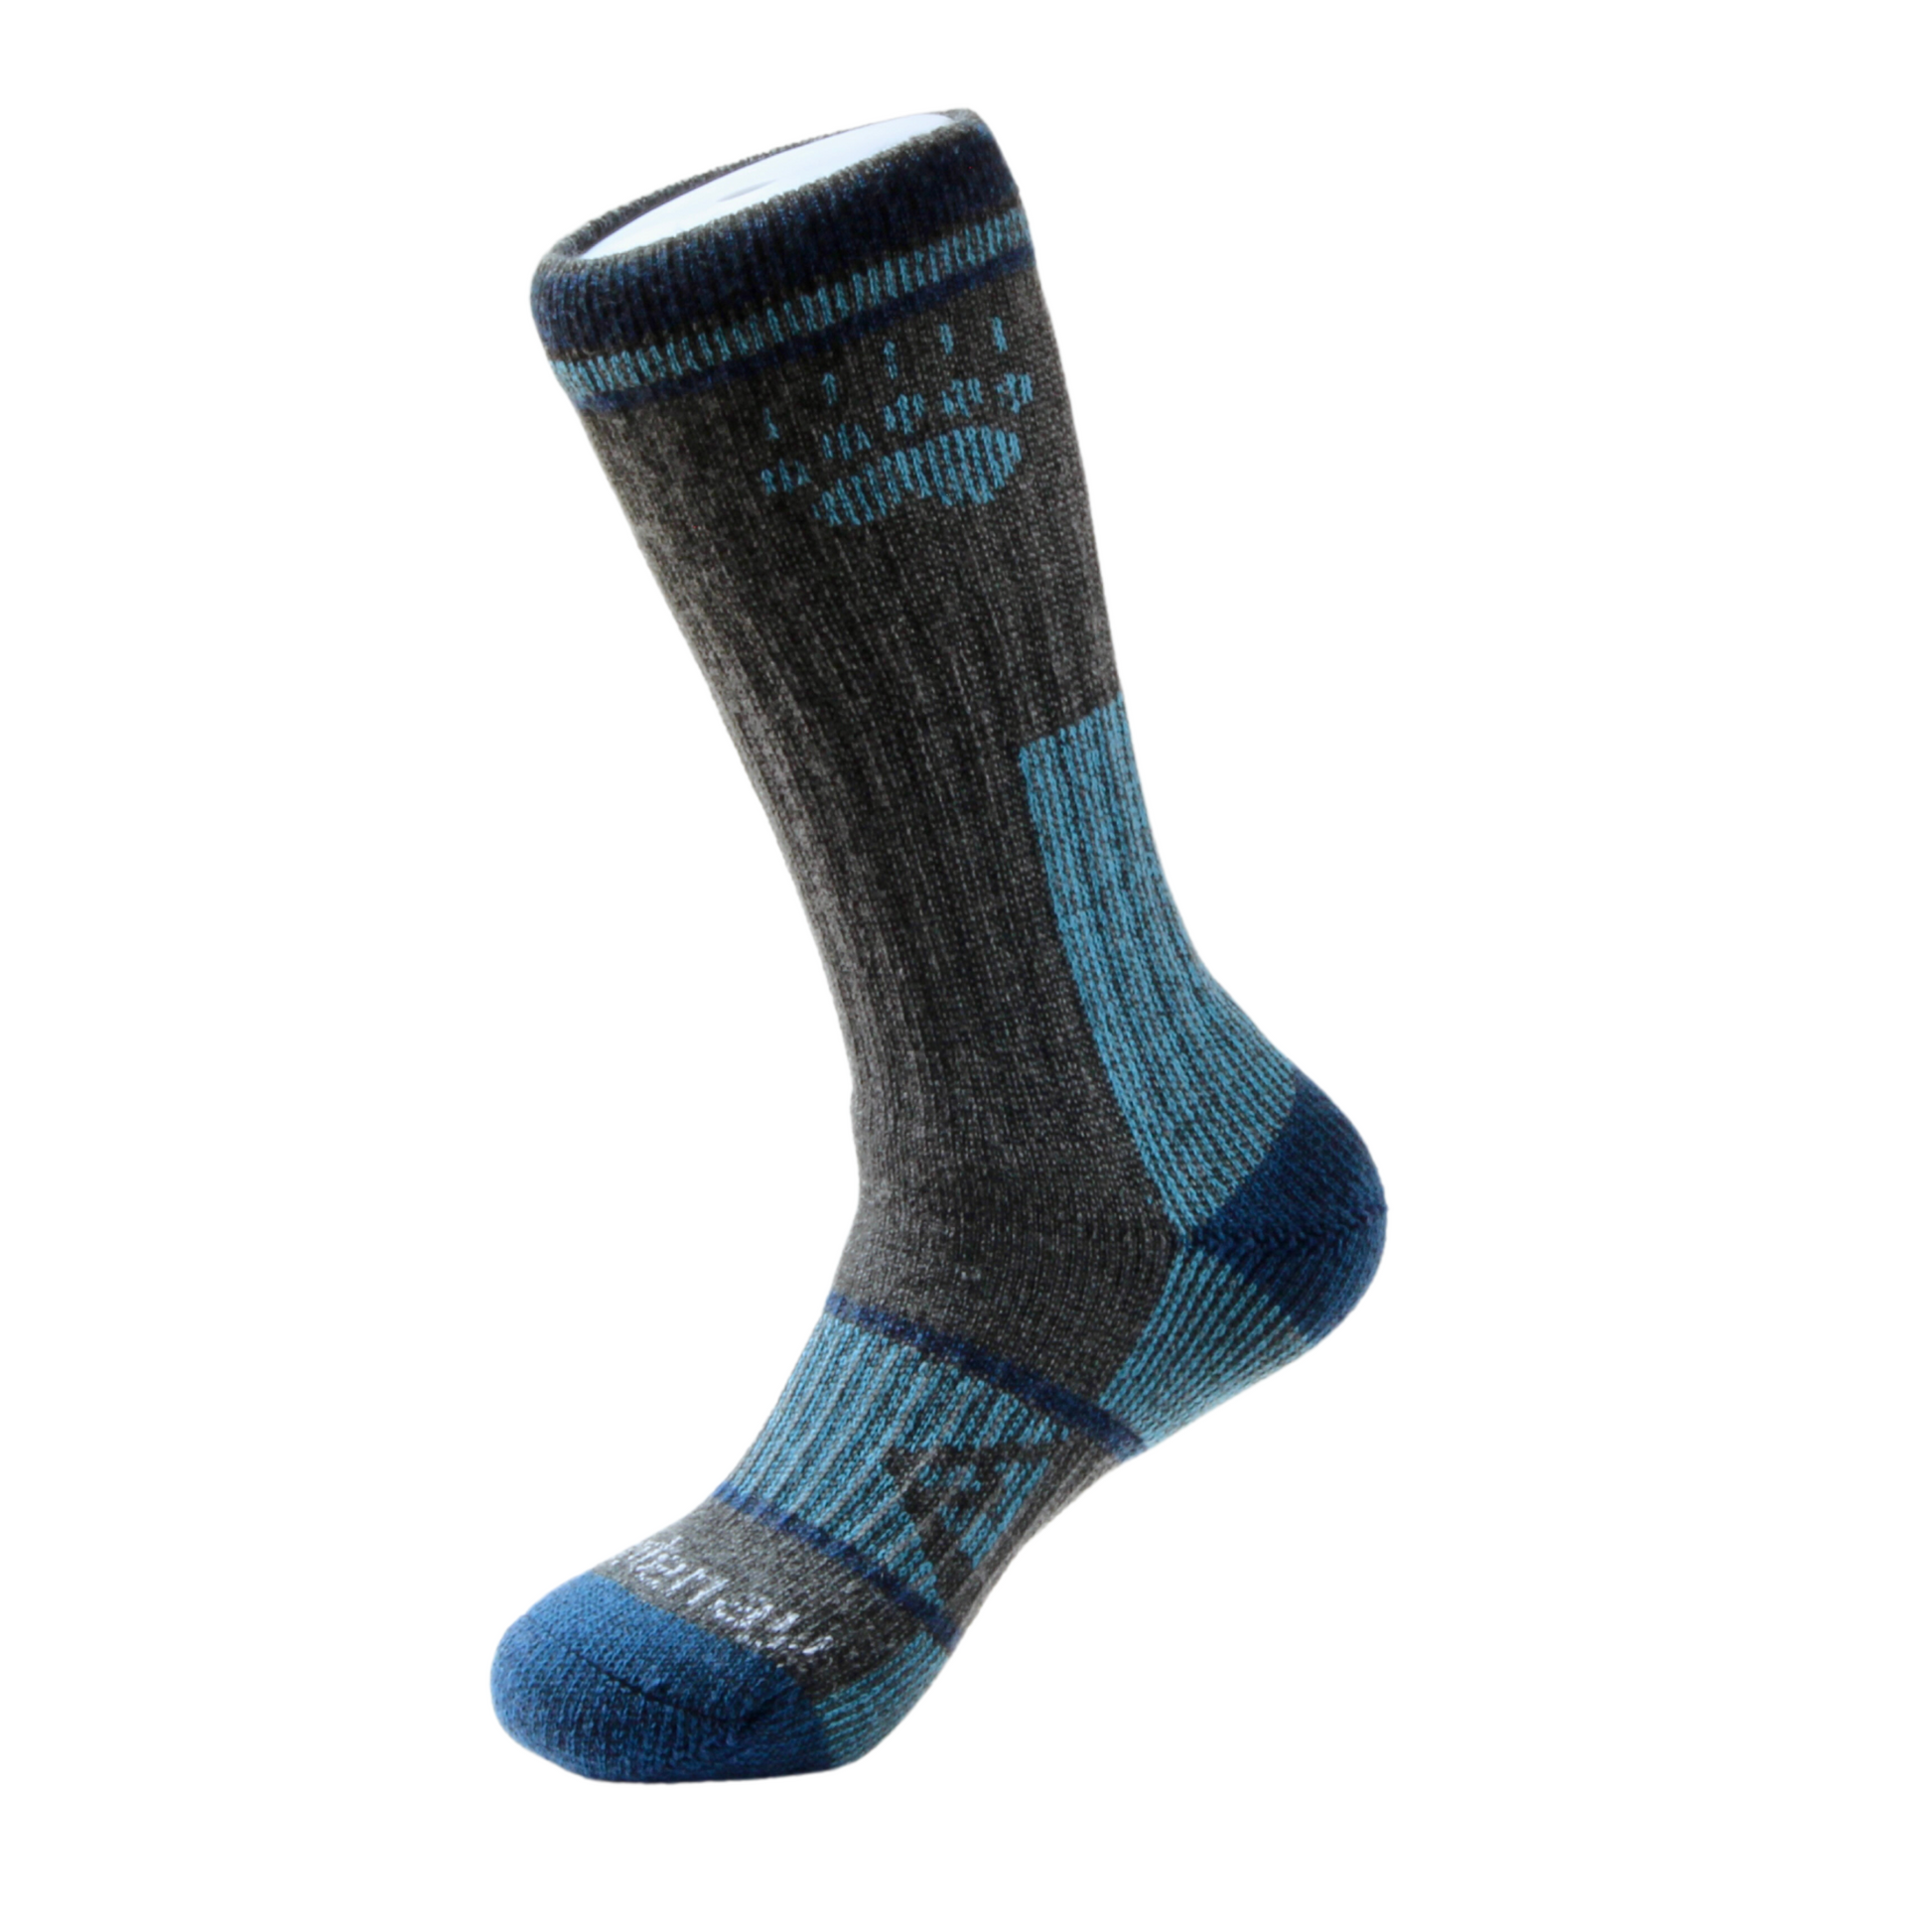 Grey & Blue Boot Heavyweight Merino Wool Kootenay Socks In The Wild